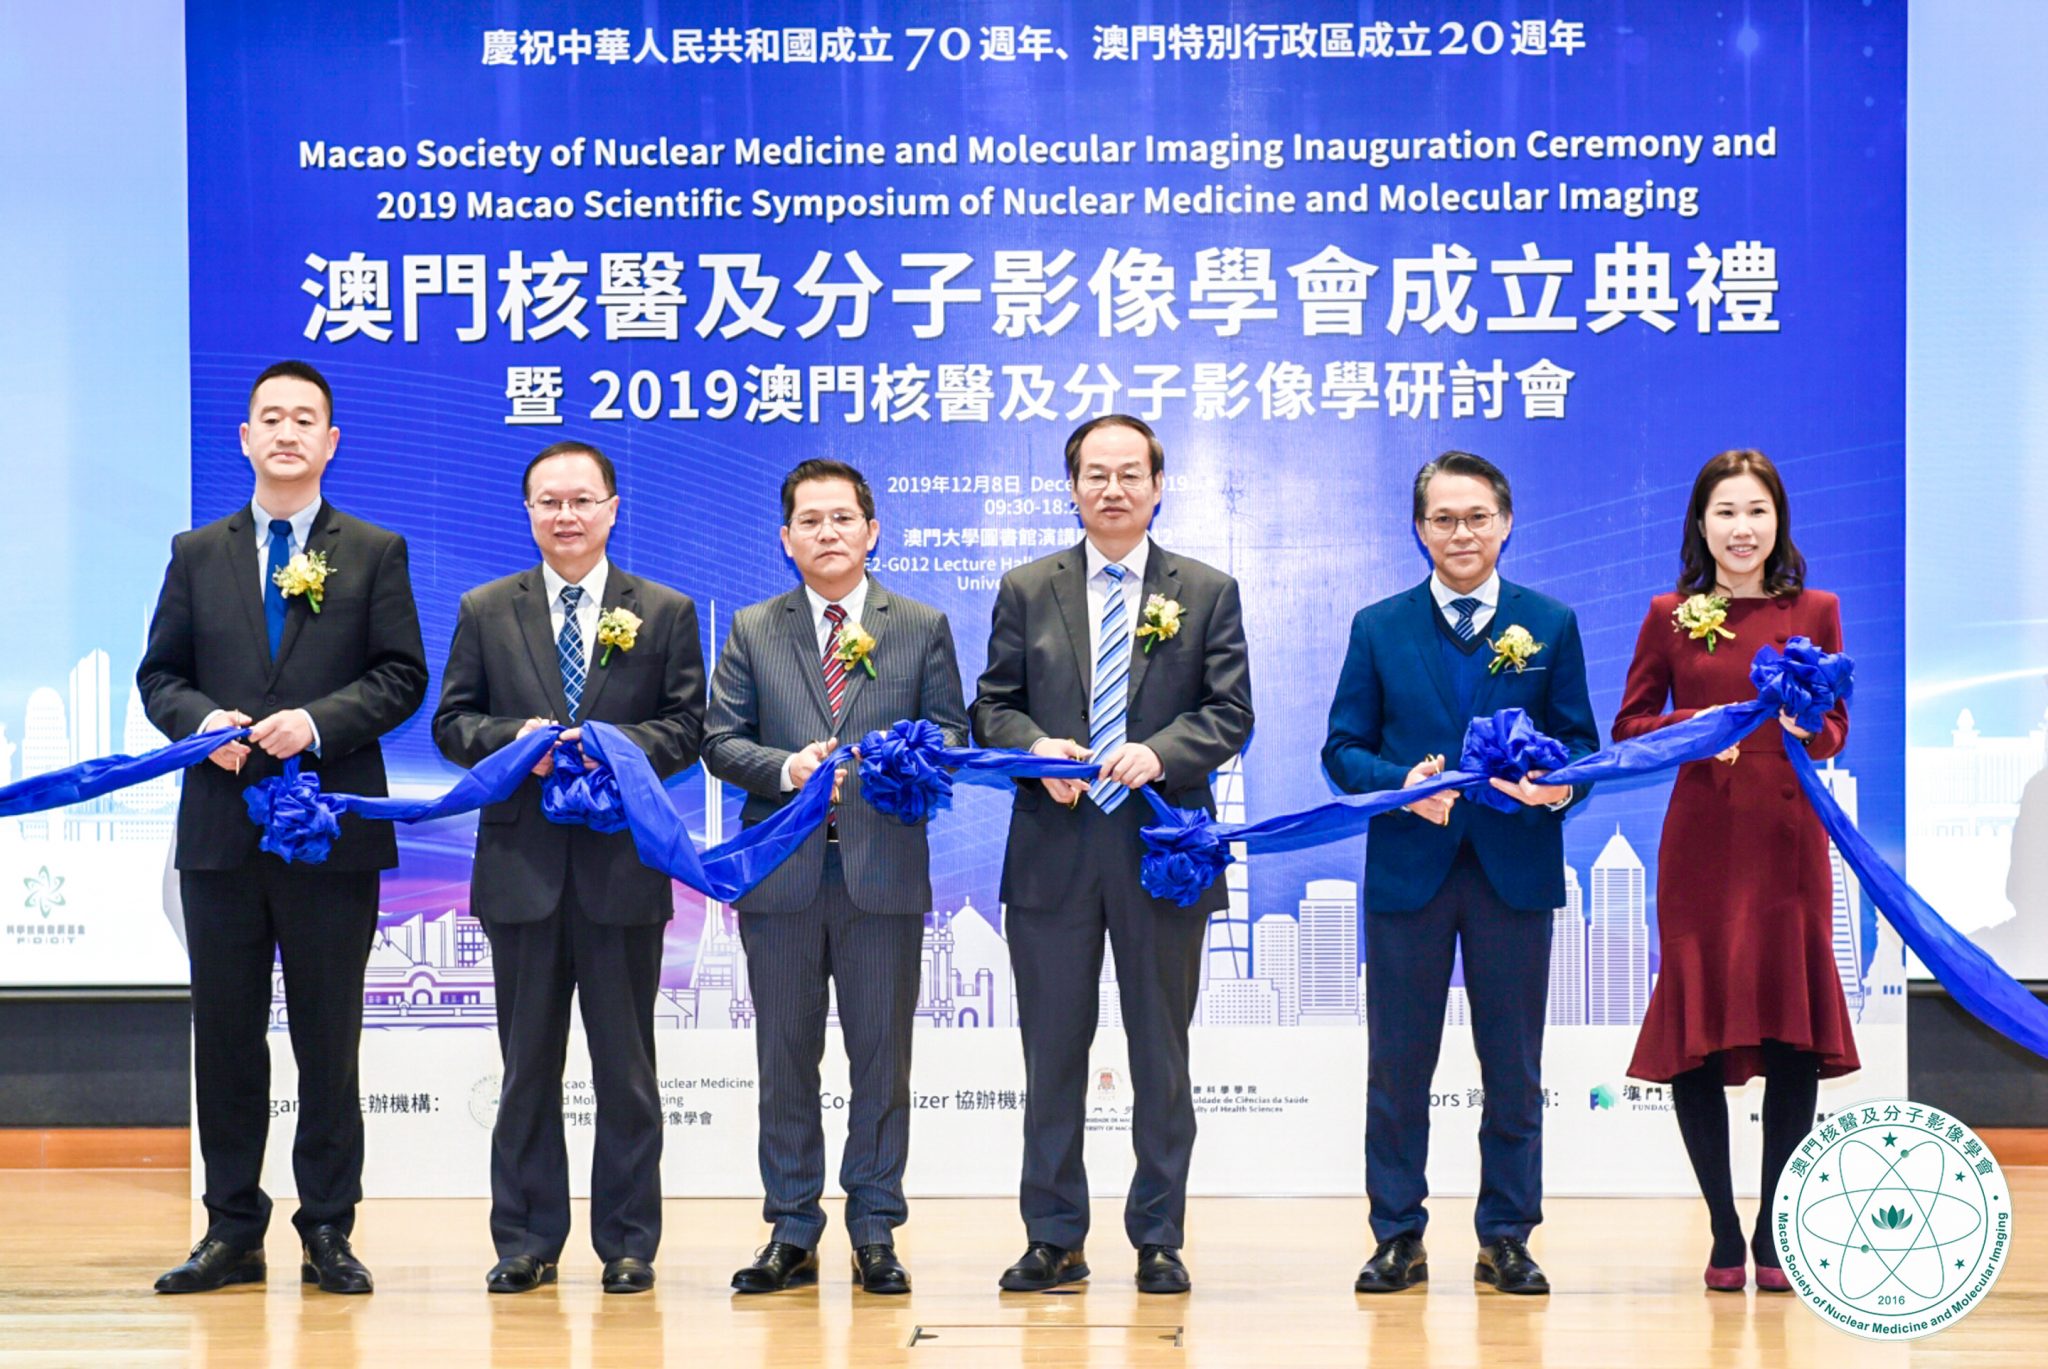 UM holds Macao Scientific Symposium of Nuclear Medicine and Molecular Imaging